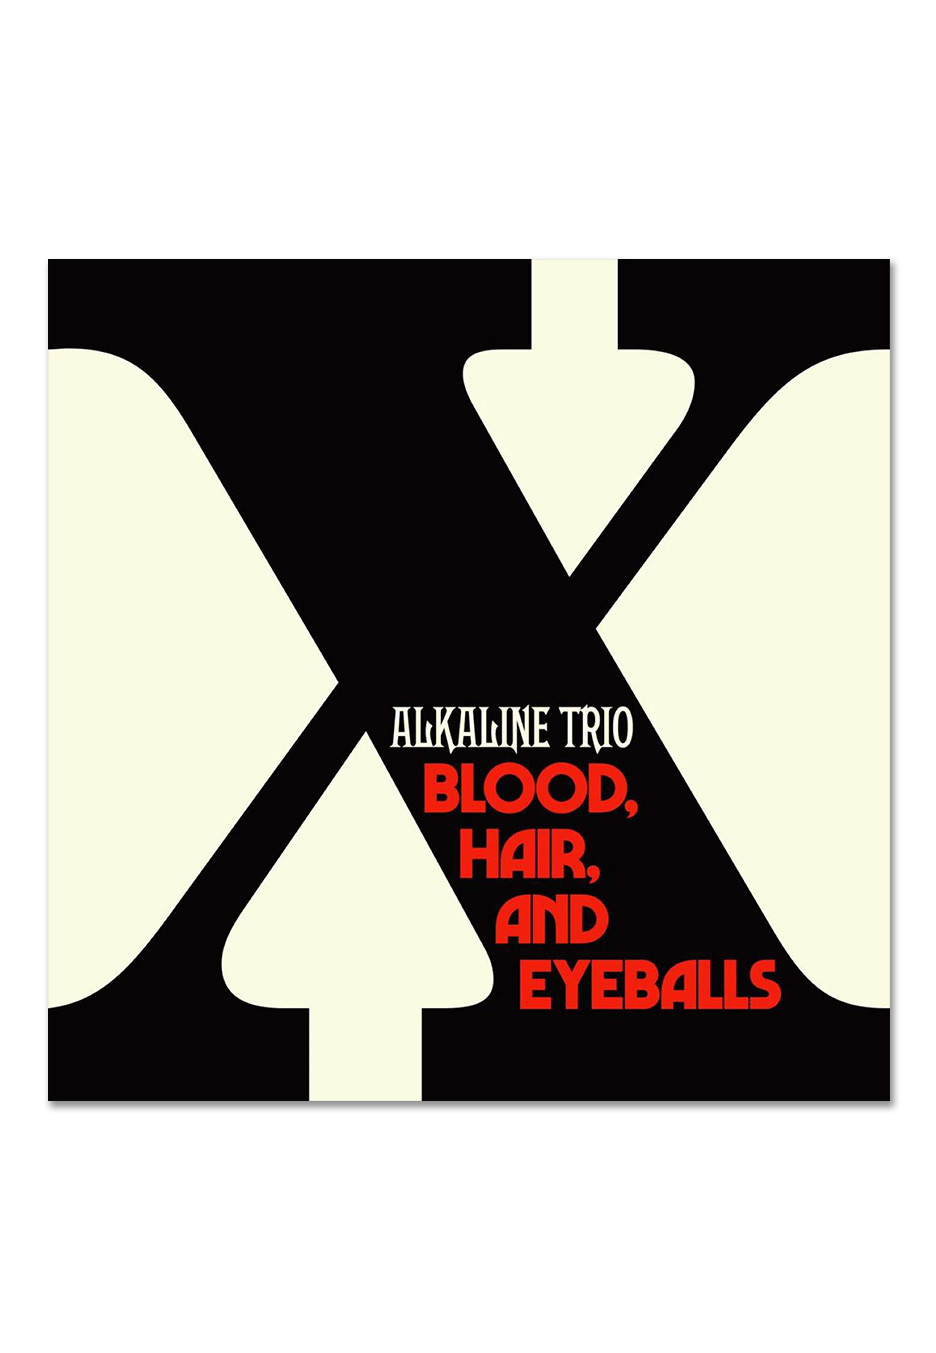 Alkaline Trio - Blood, Hair, And Eyeballs - Vinyl